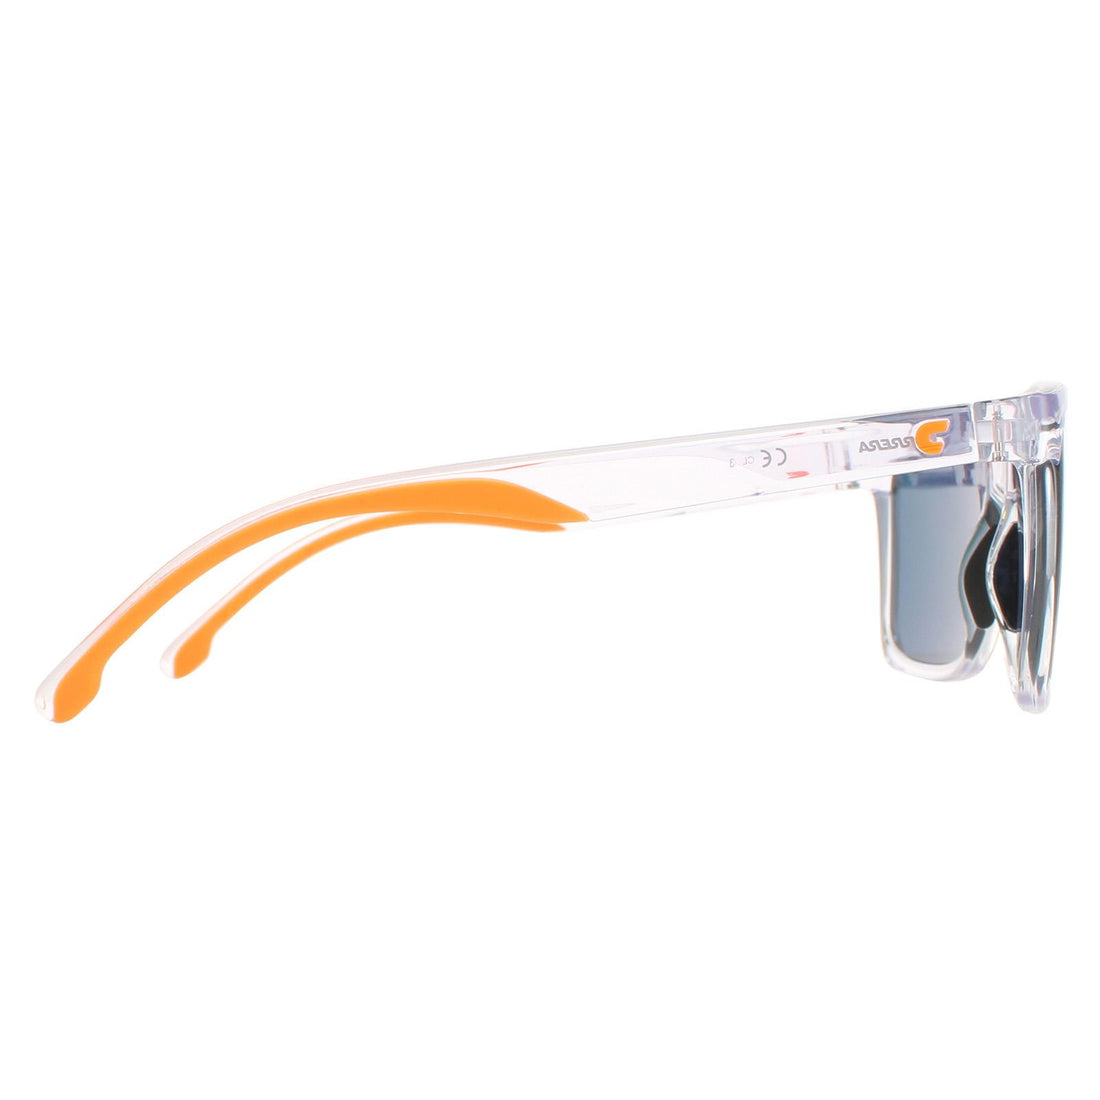 Carrera Sunglasses 8055/S 900 UZ Crystal Red Mirror